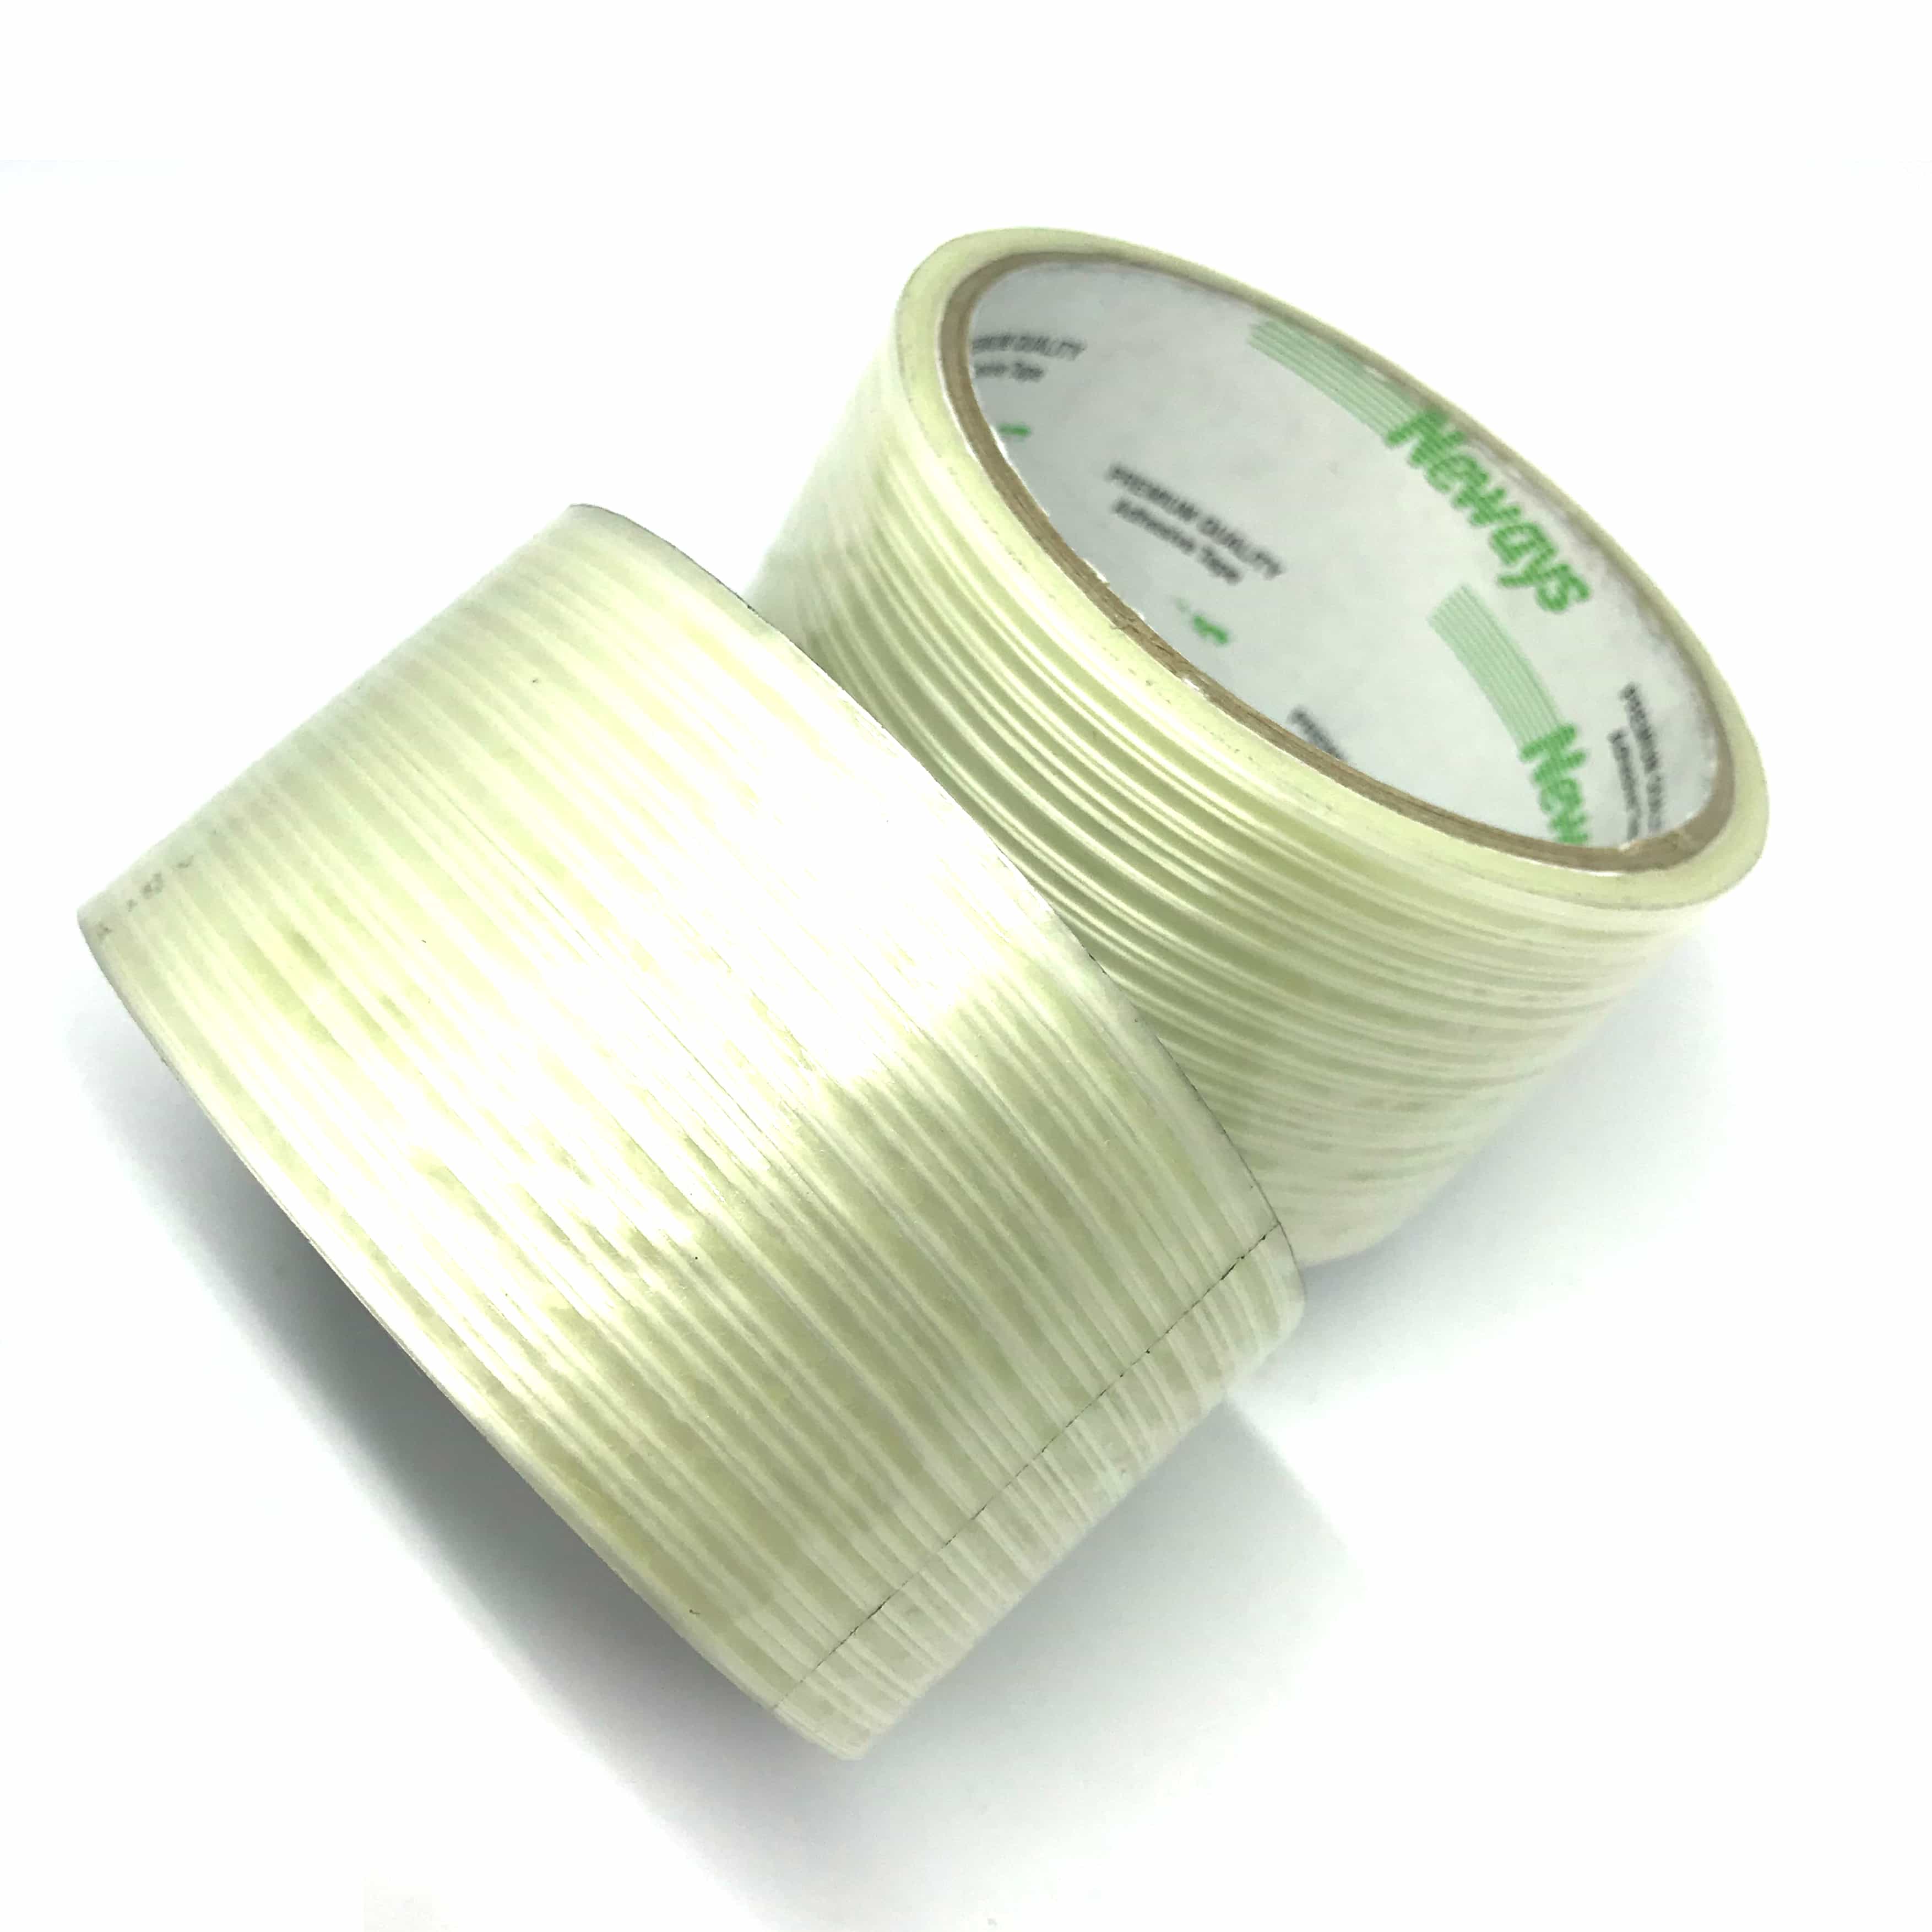 Filament Tape (4)